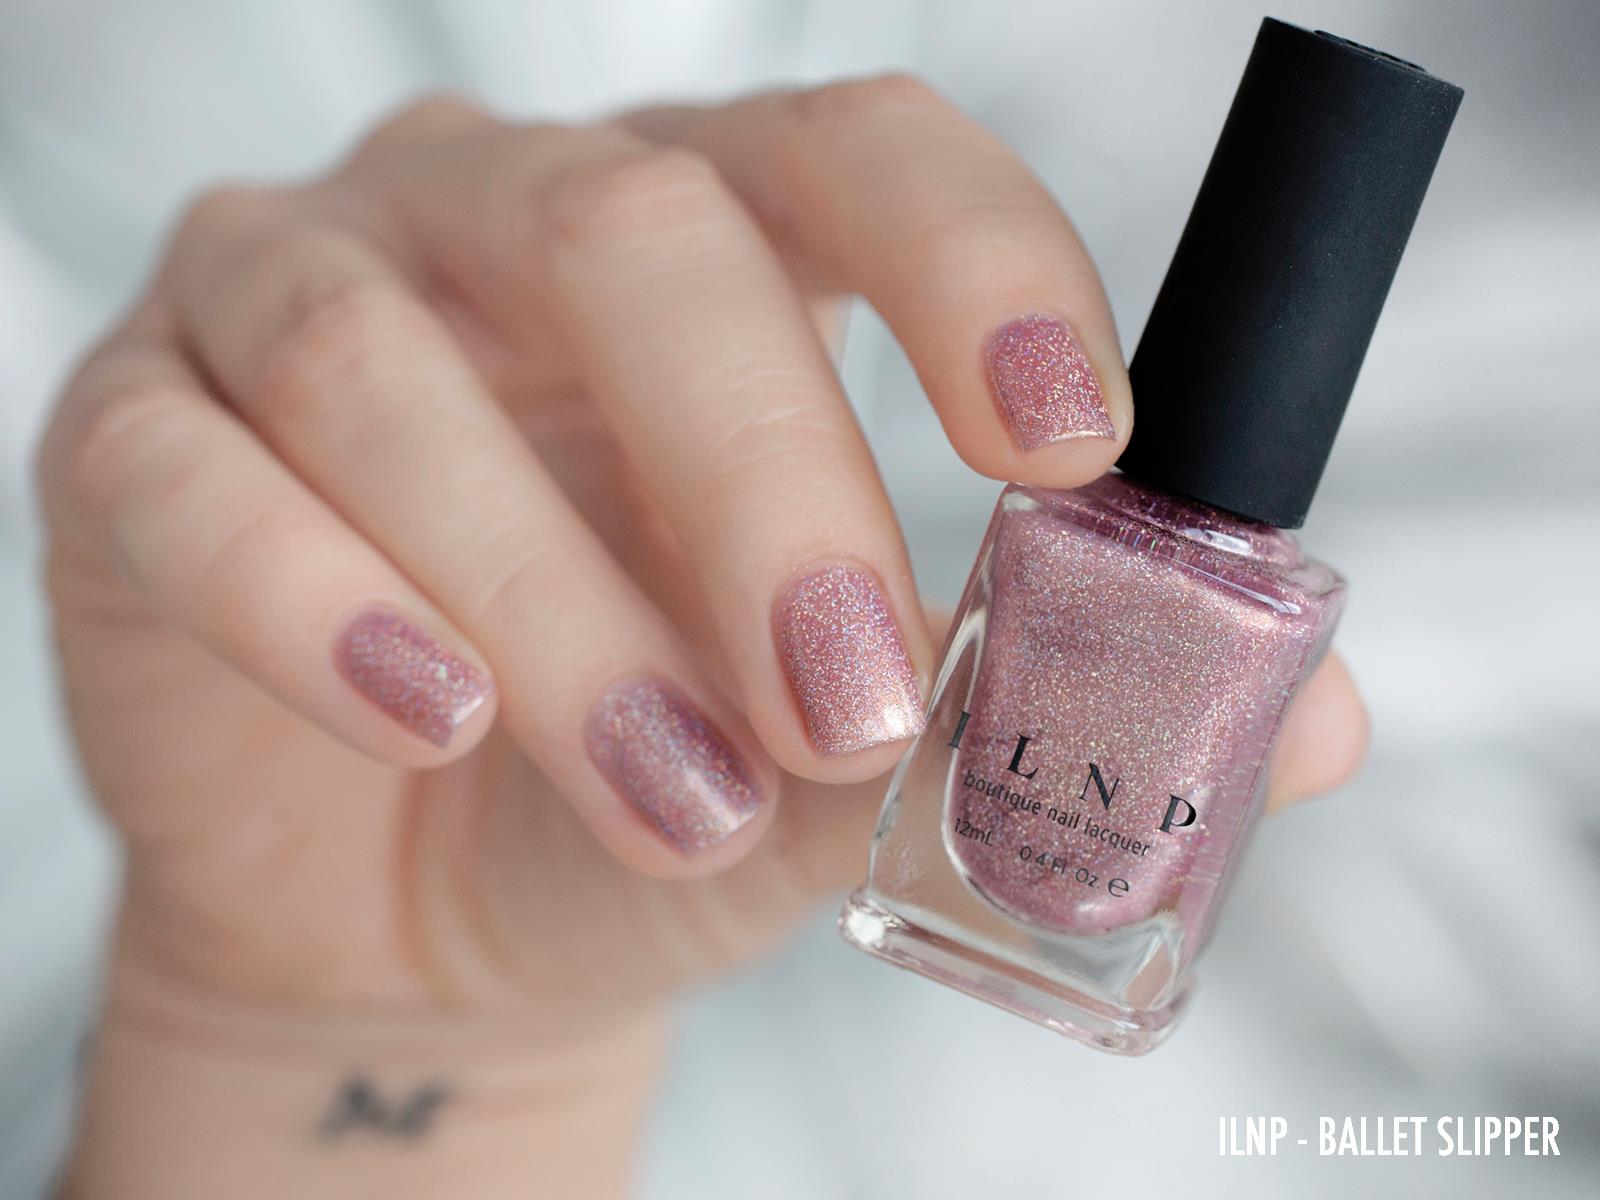 2. "Ballet slipper" pink nail polish - wide 1